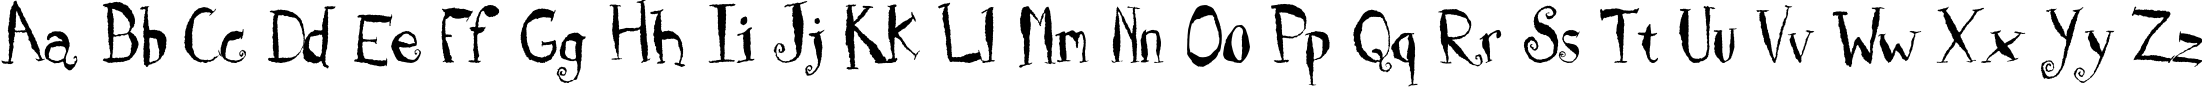 Пример написания английского алфавита шрифтом HolyCow